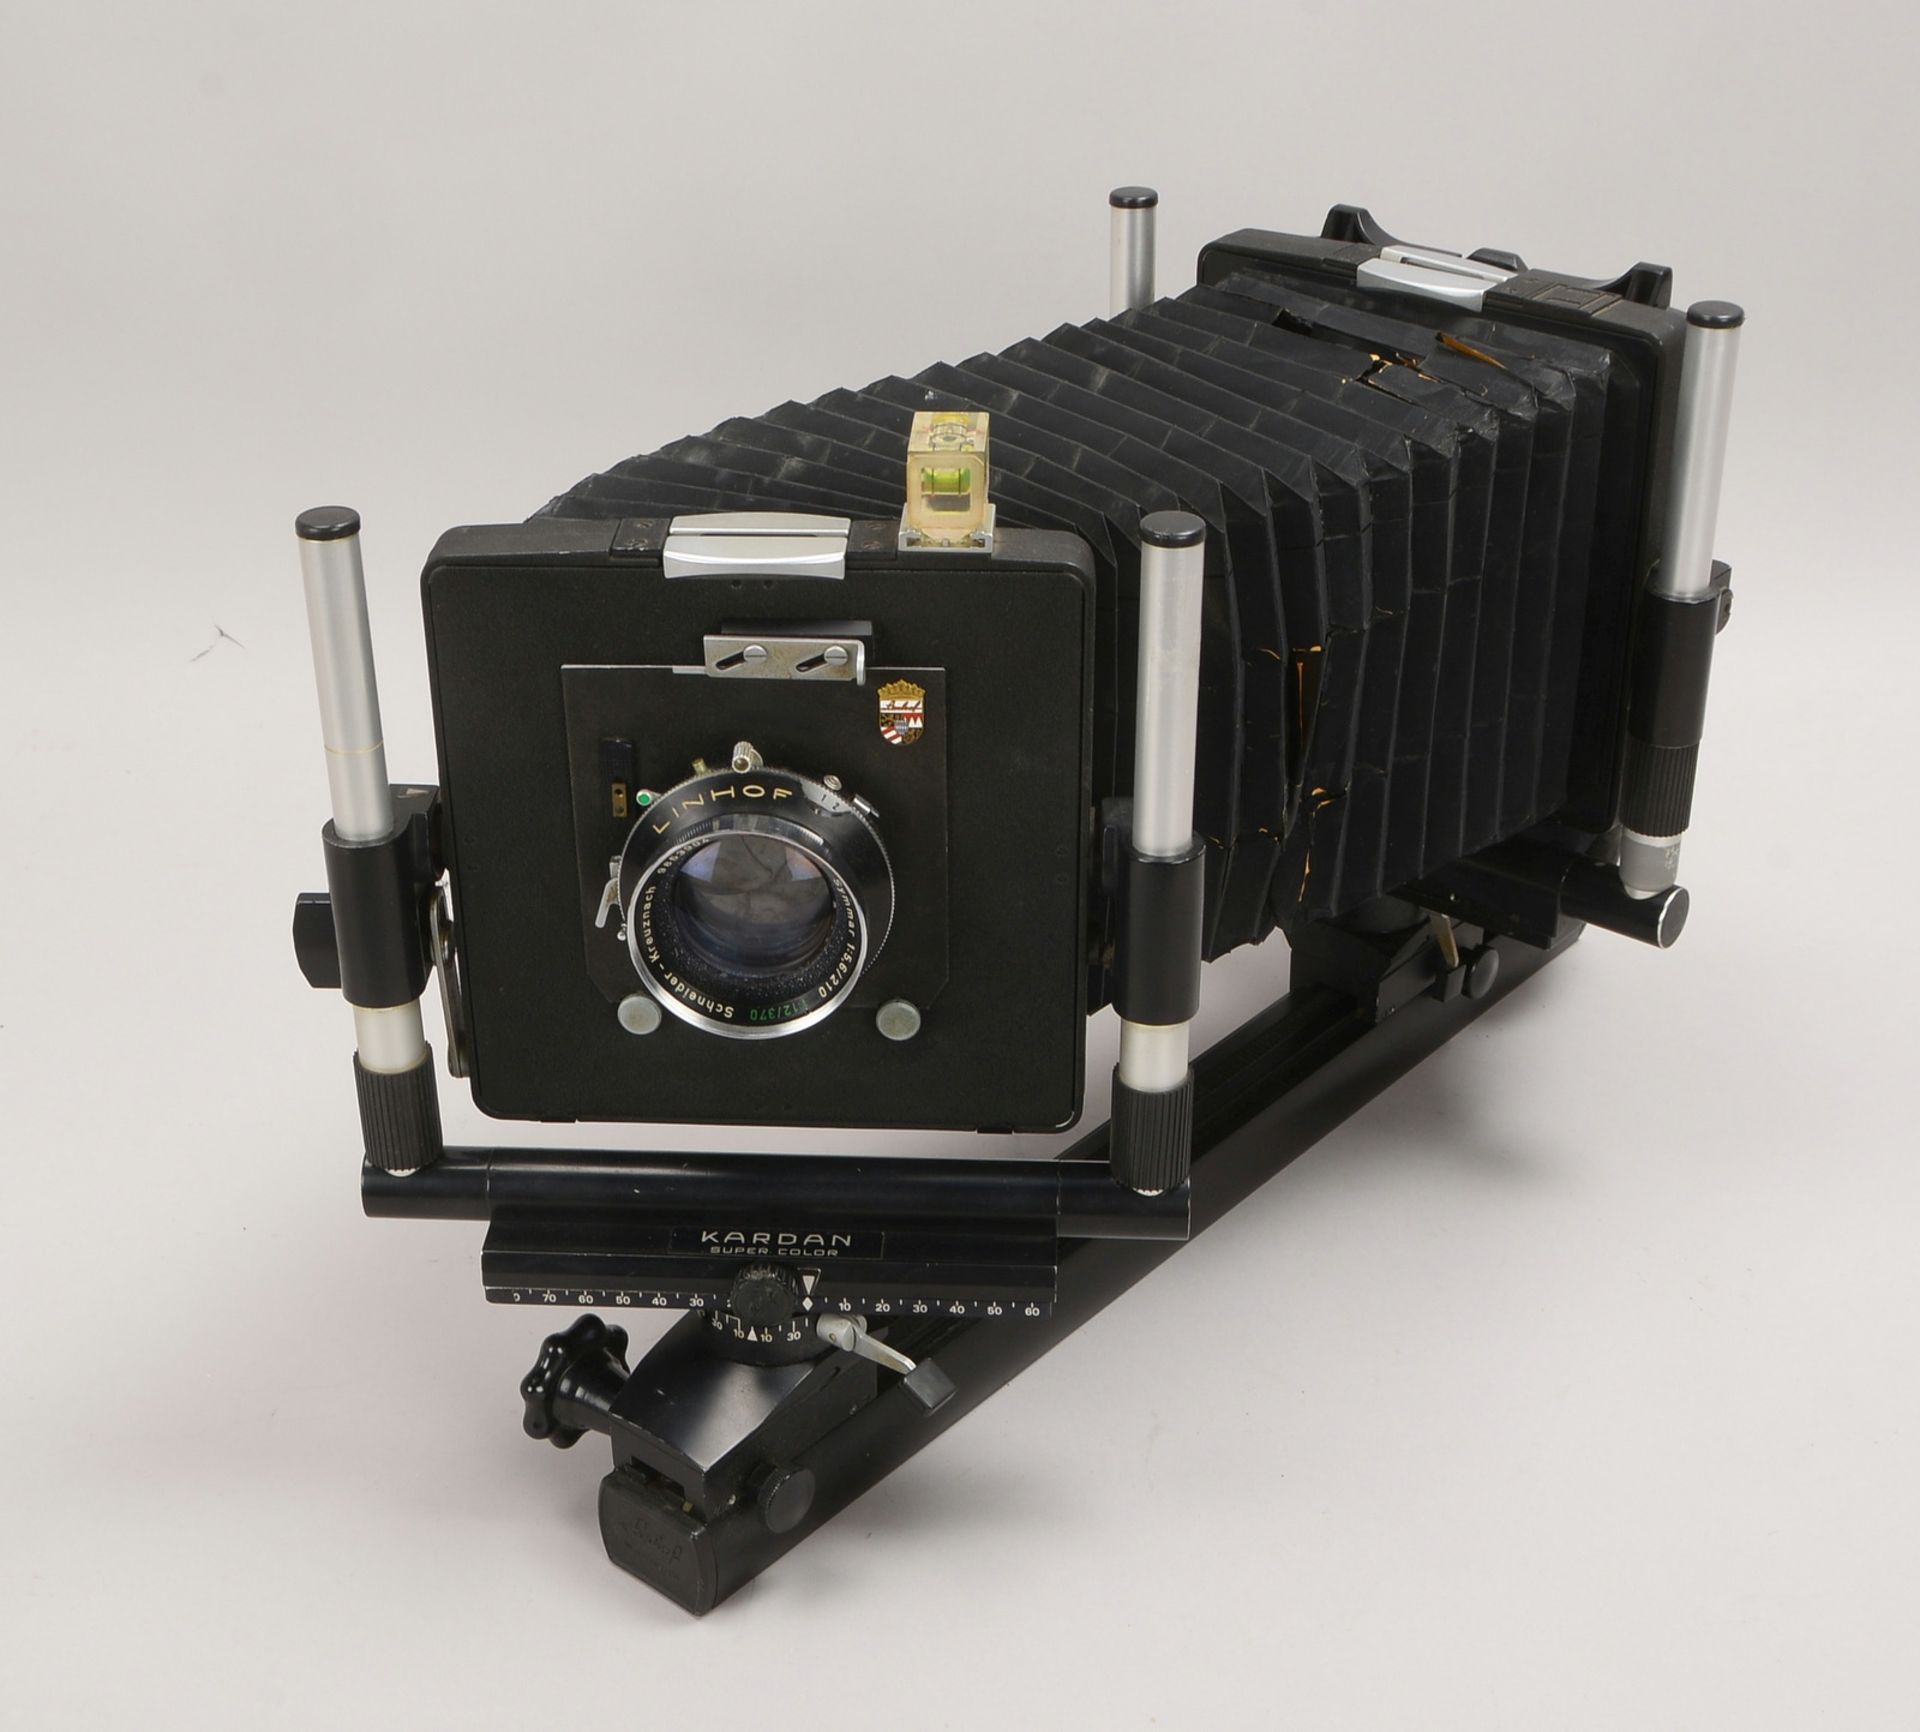 Kamera, Linhof 'Kardan Super Color', mit Objektiv 'Symmar 1:5,6/210' - anbei Passeport